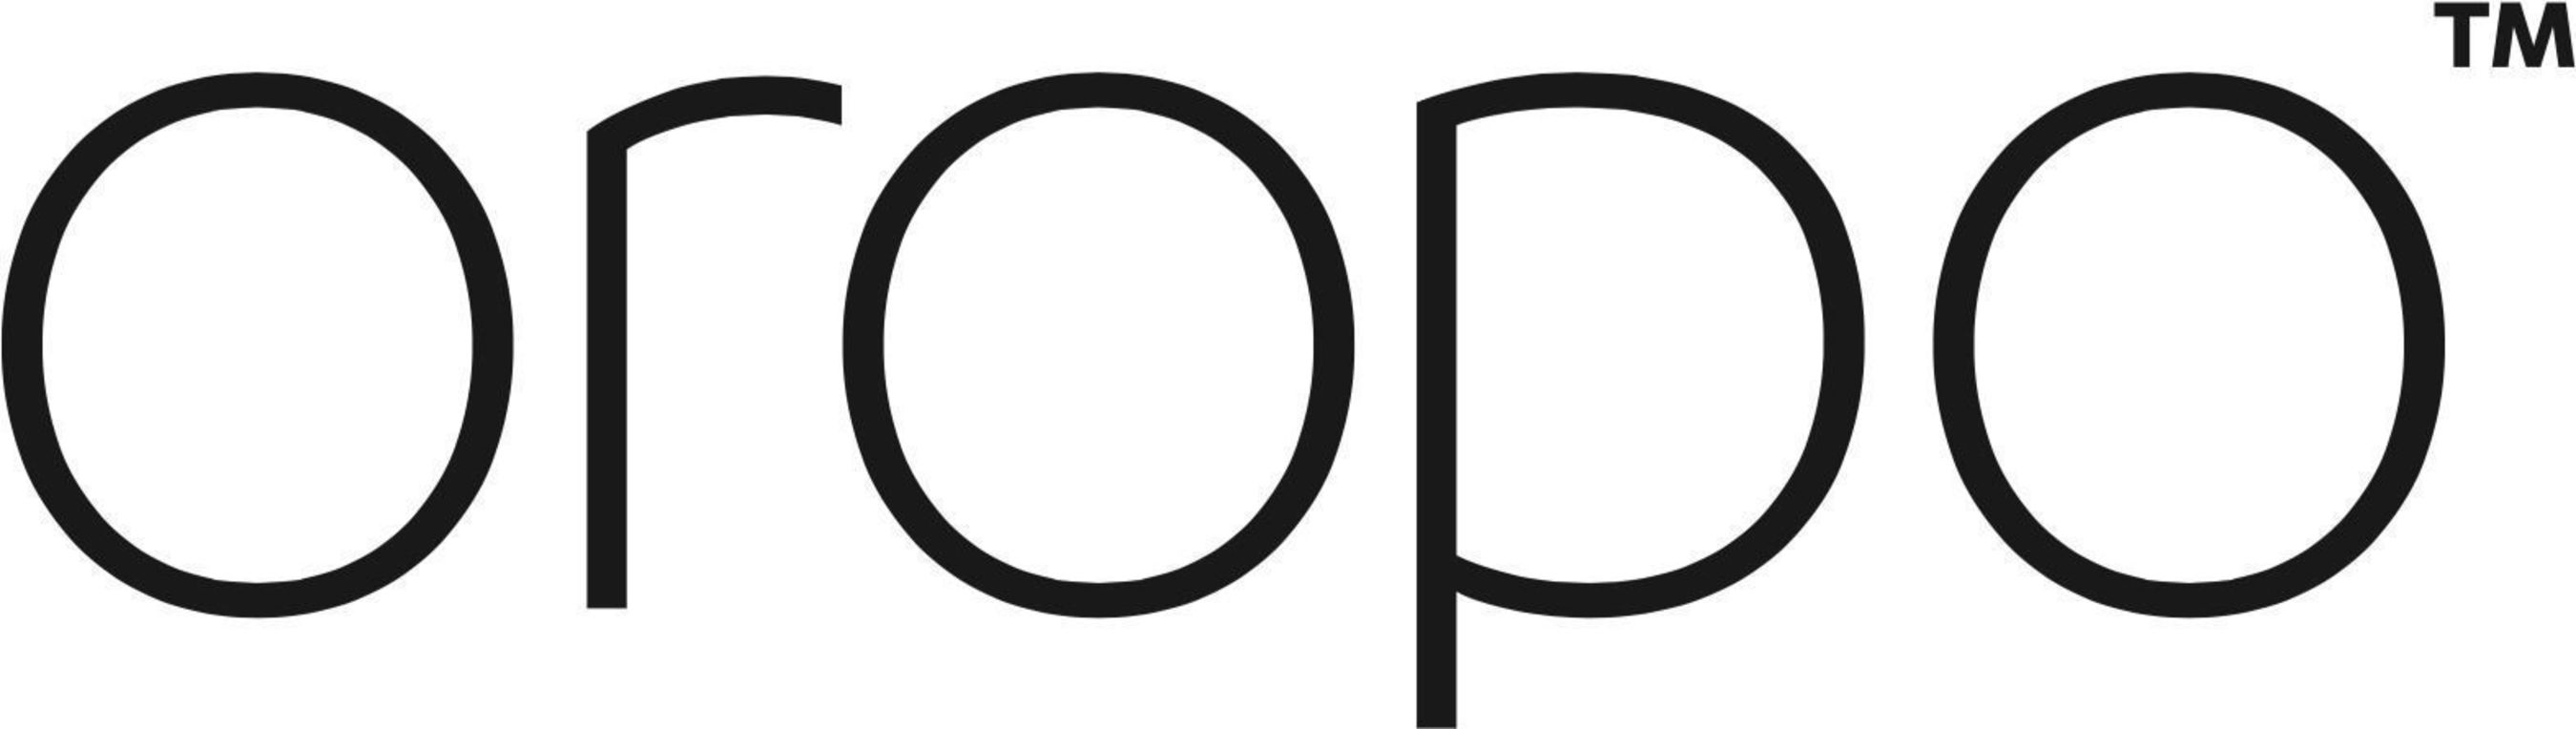 ORoPO logo (PRNewsFoto/ORoPO)